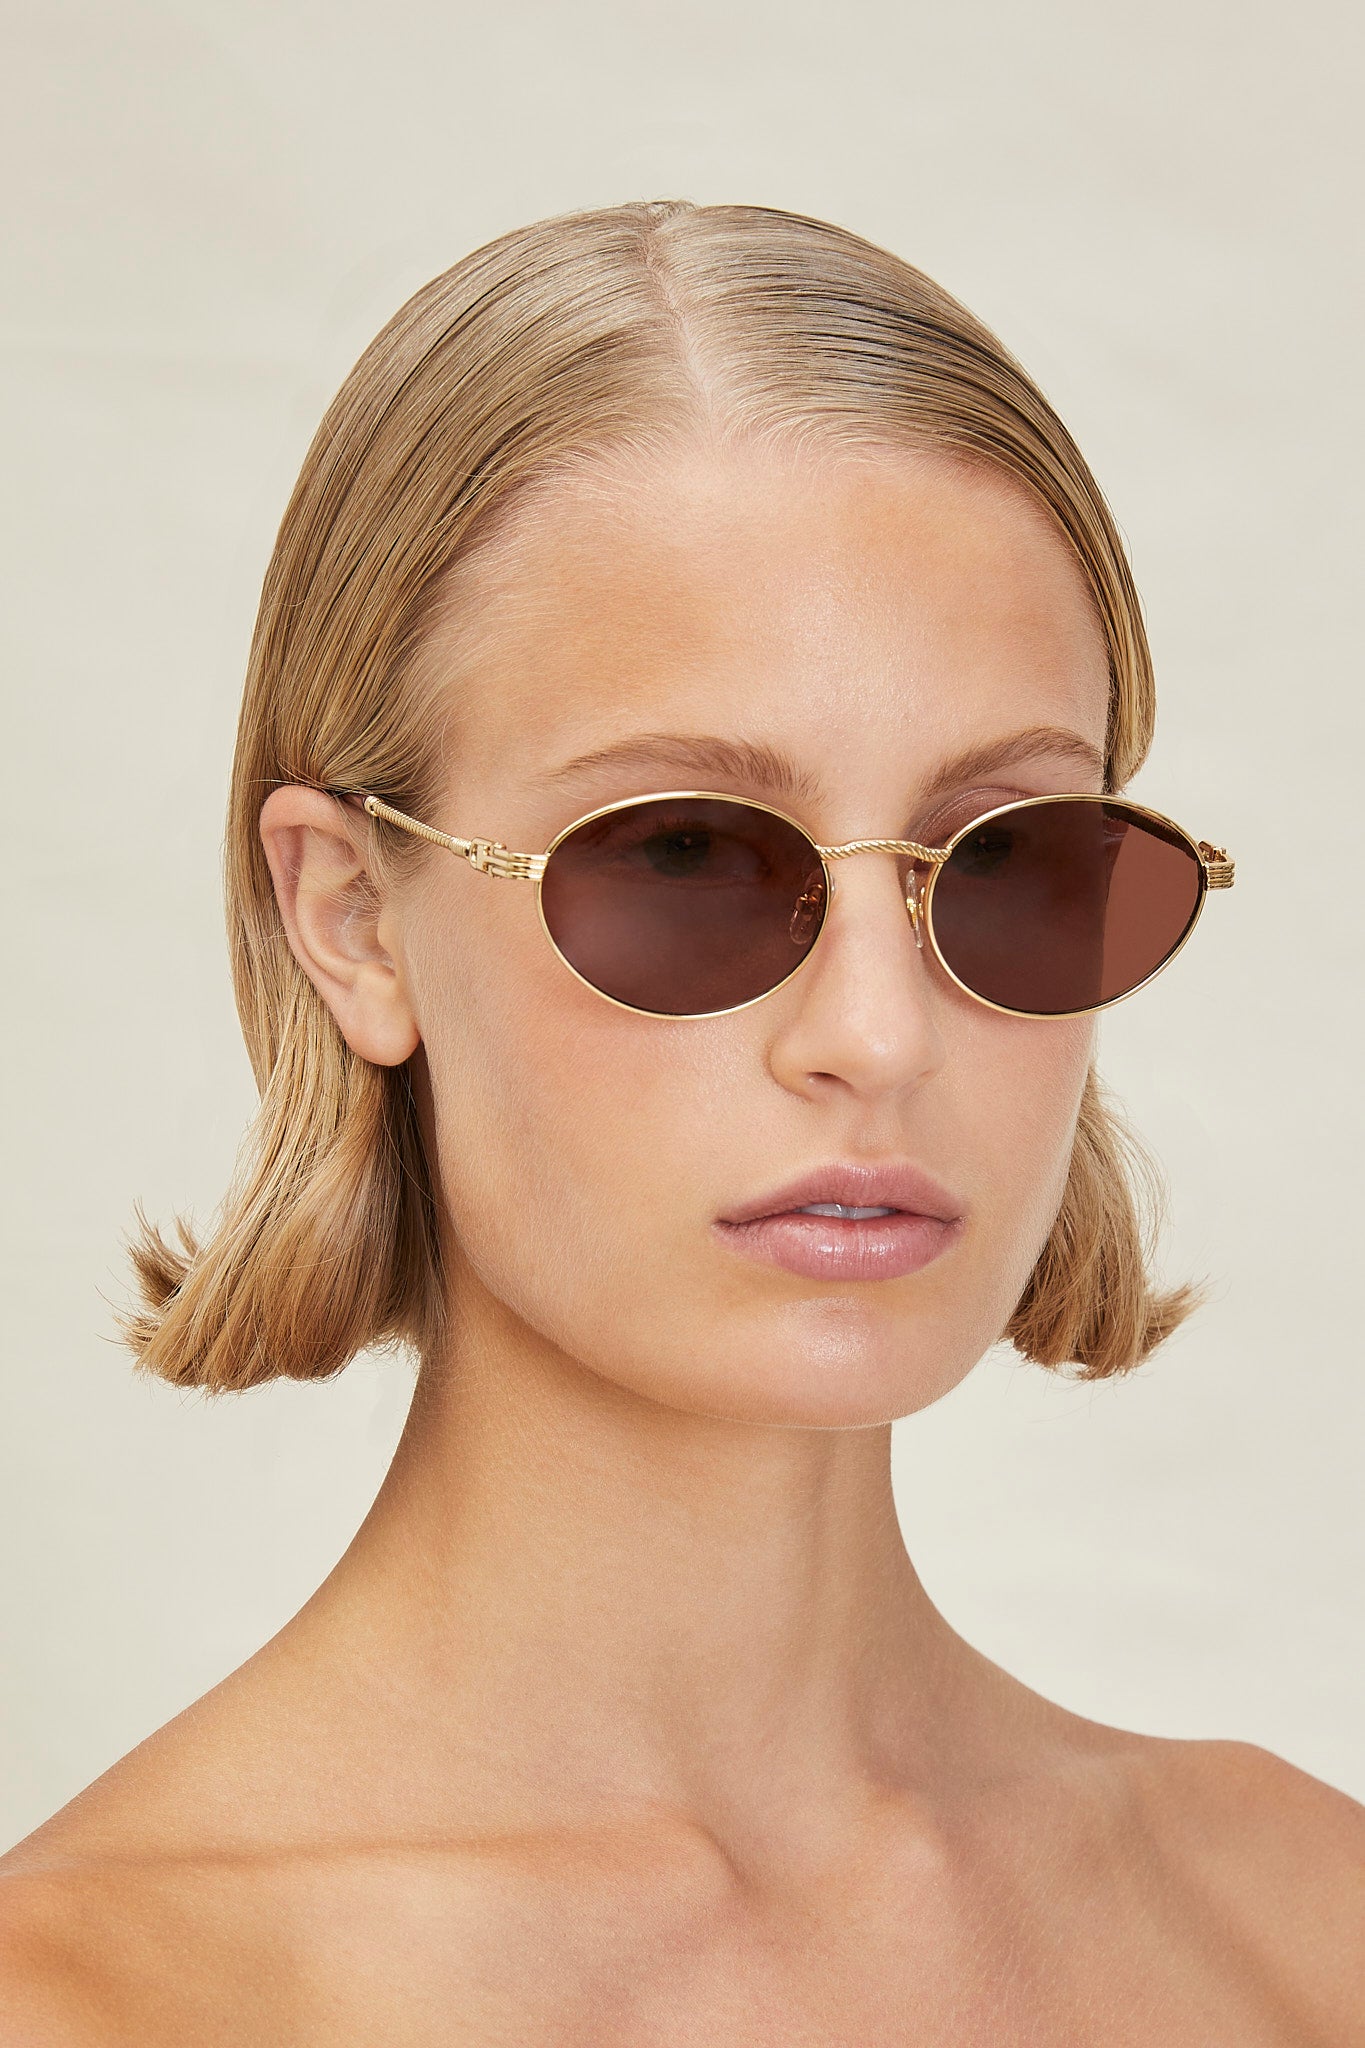 Aggregate more than 72 windsor sunglasses super hot